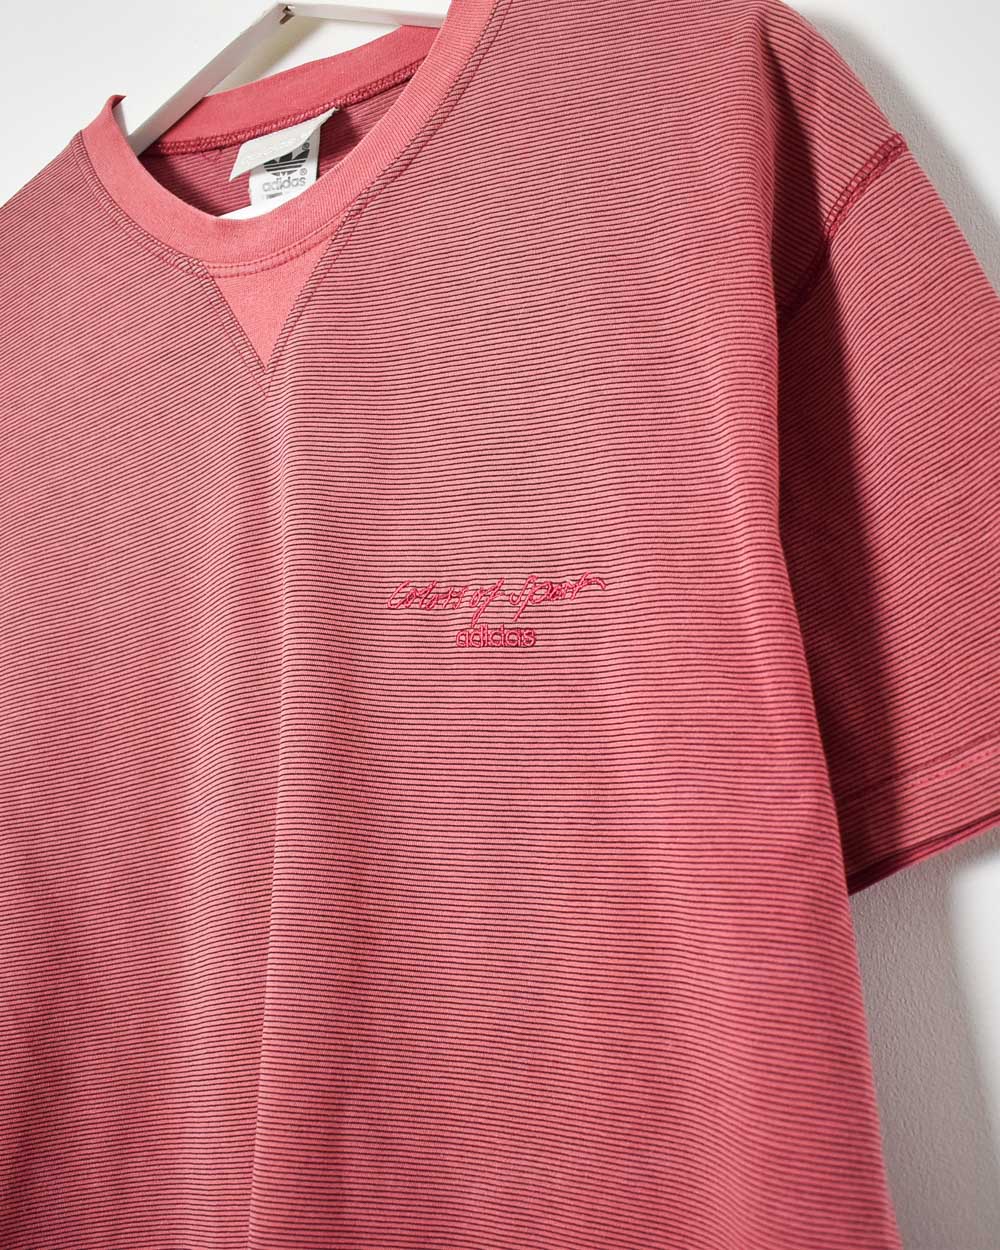 Pink Adidas Colours of Sport T-Shirt - Medium